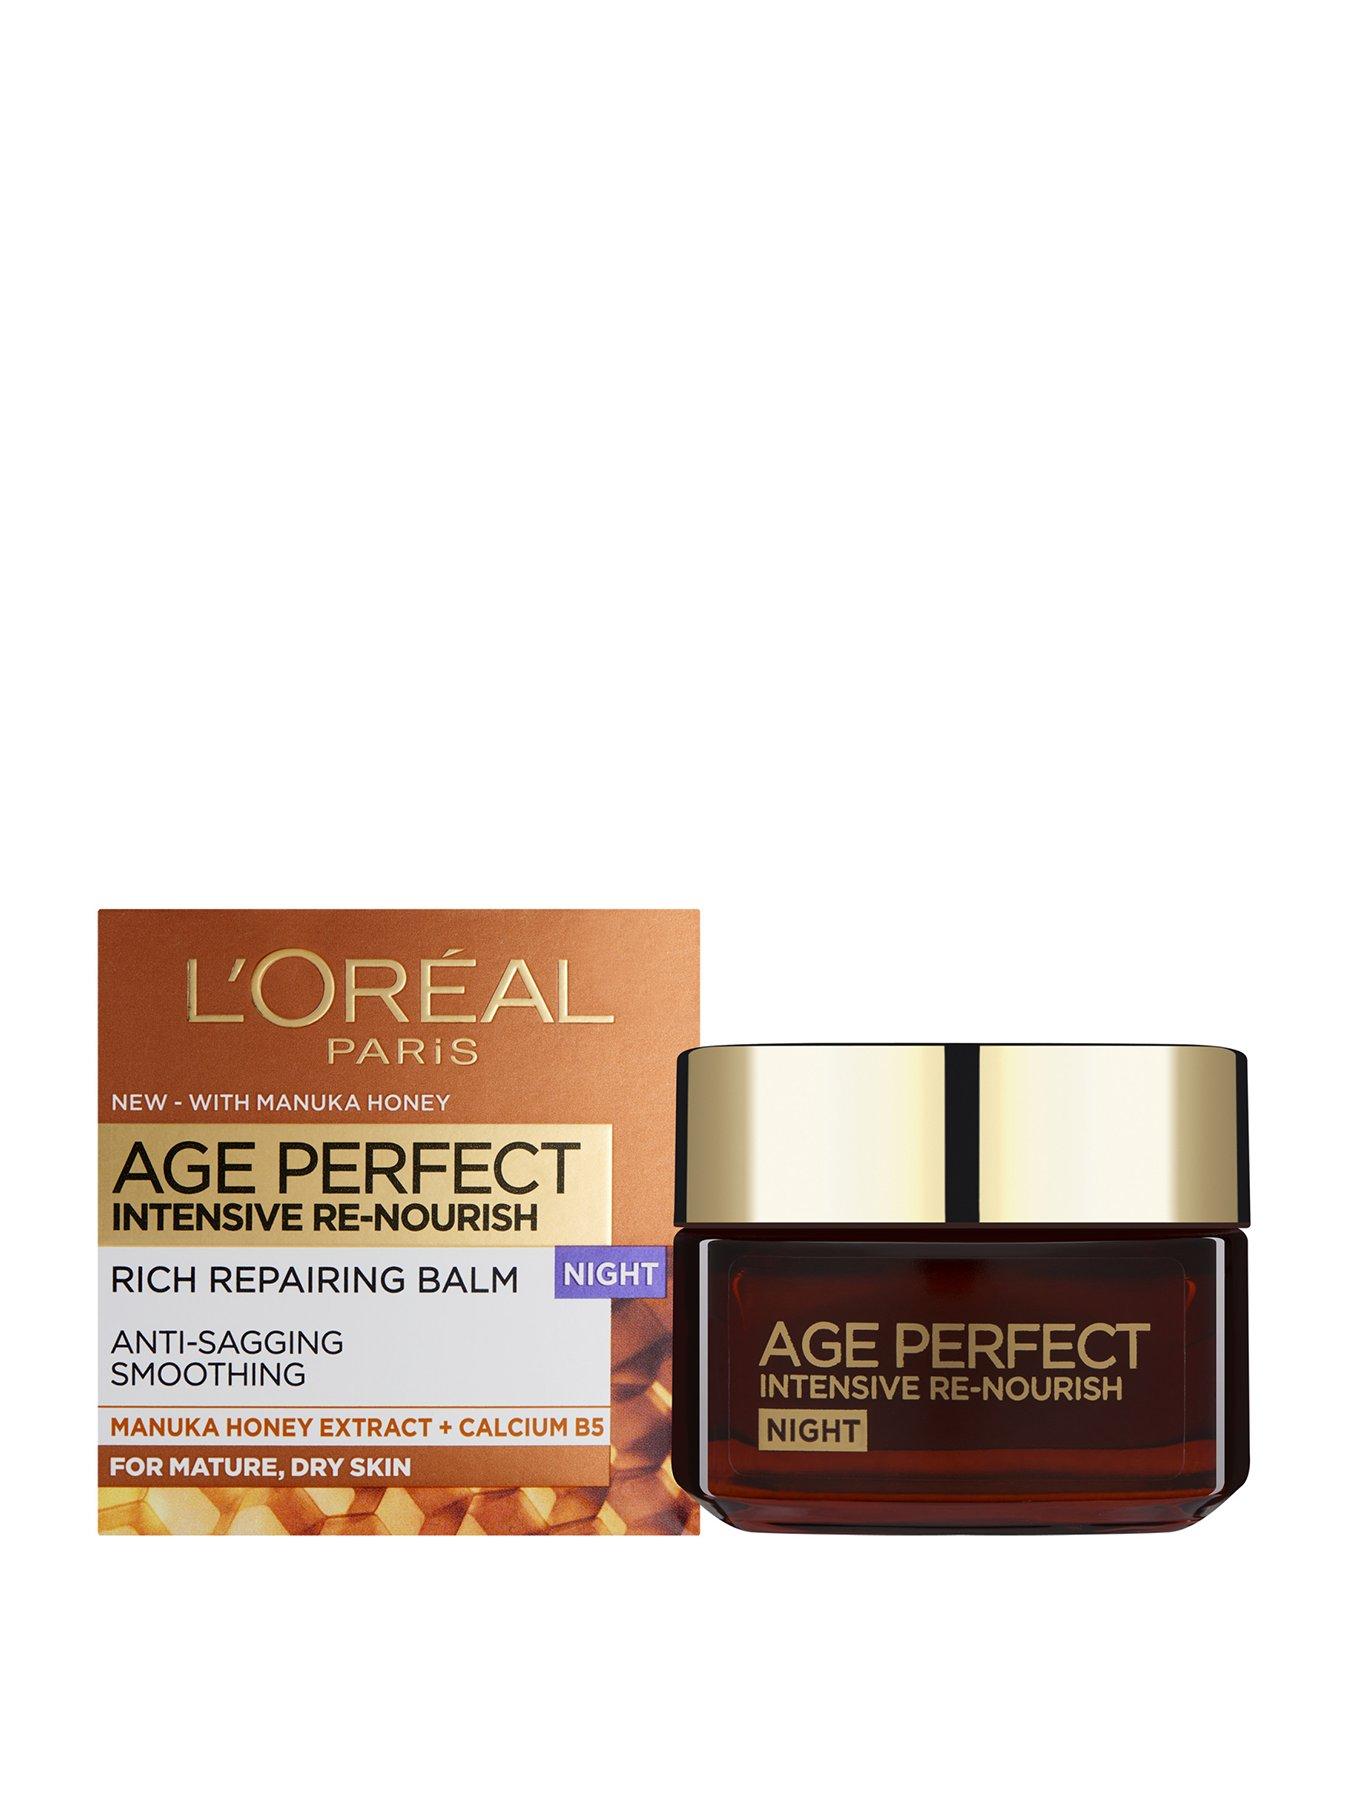 L'Oreal Paris Age Perfect Intensive Renourish Manuka Honey Night Cream for Dry Skin 50ml, One Colour, Women